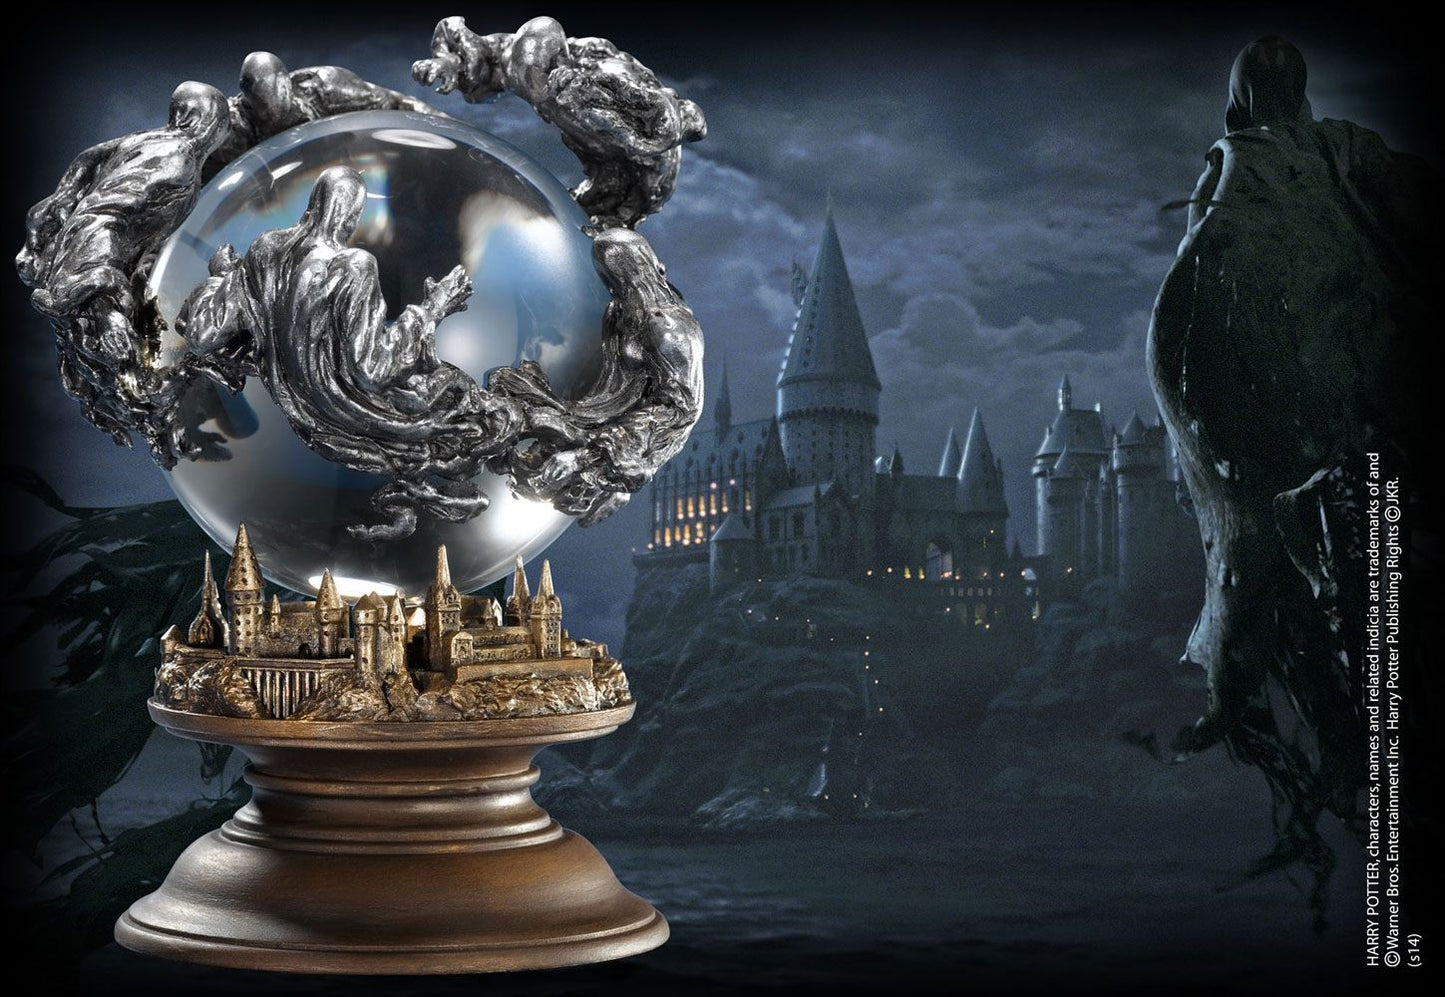 Harry Potter - Estatua Dementores